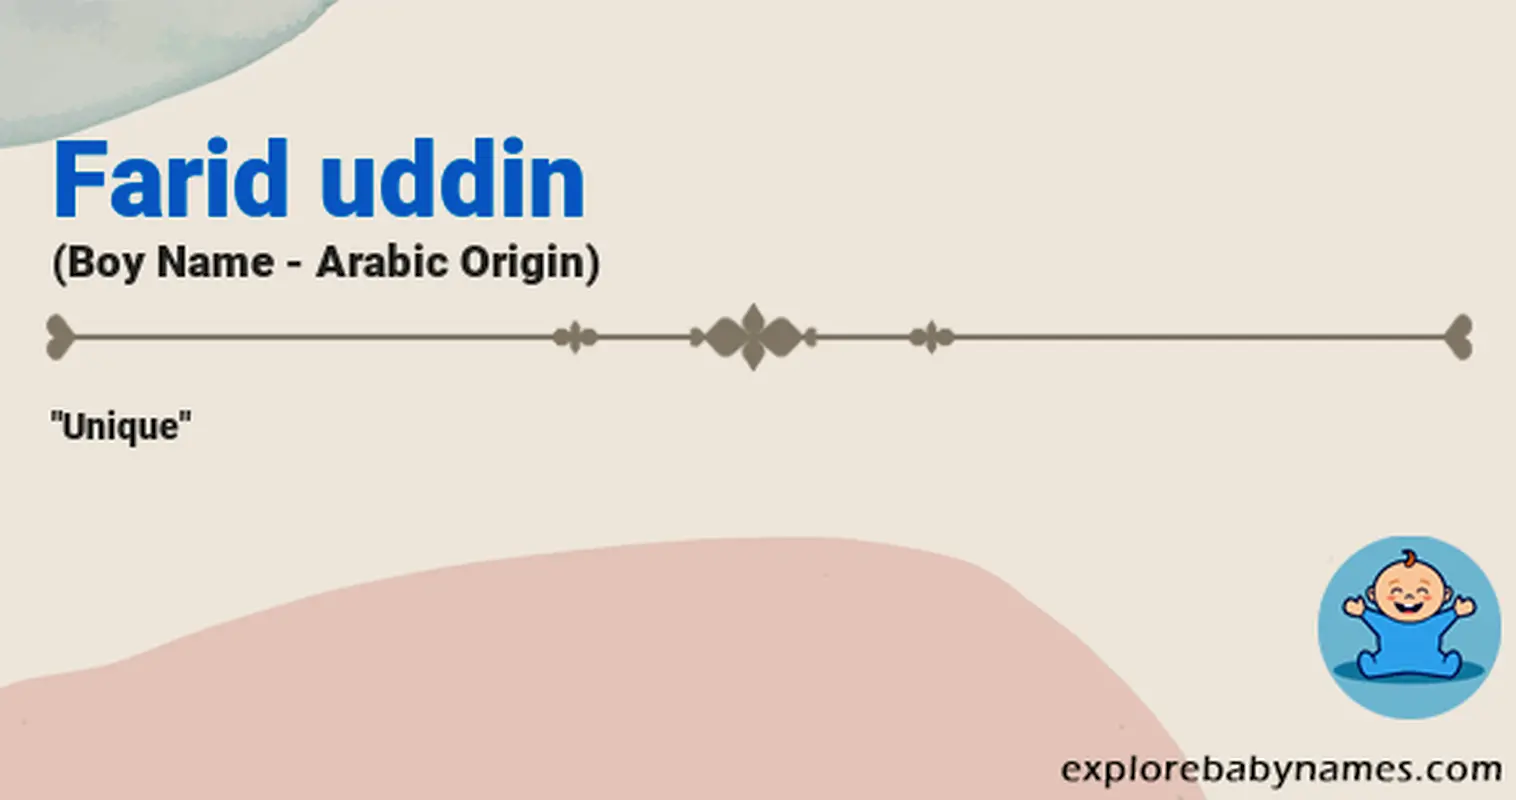 Meaning of Farid uddin